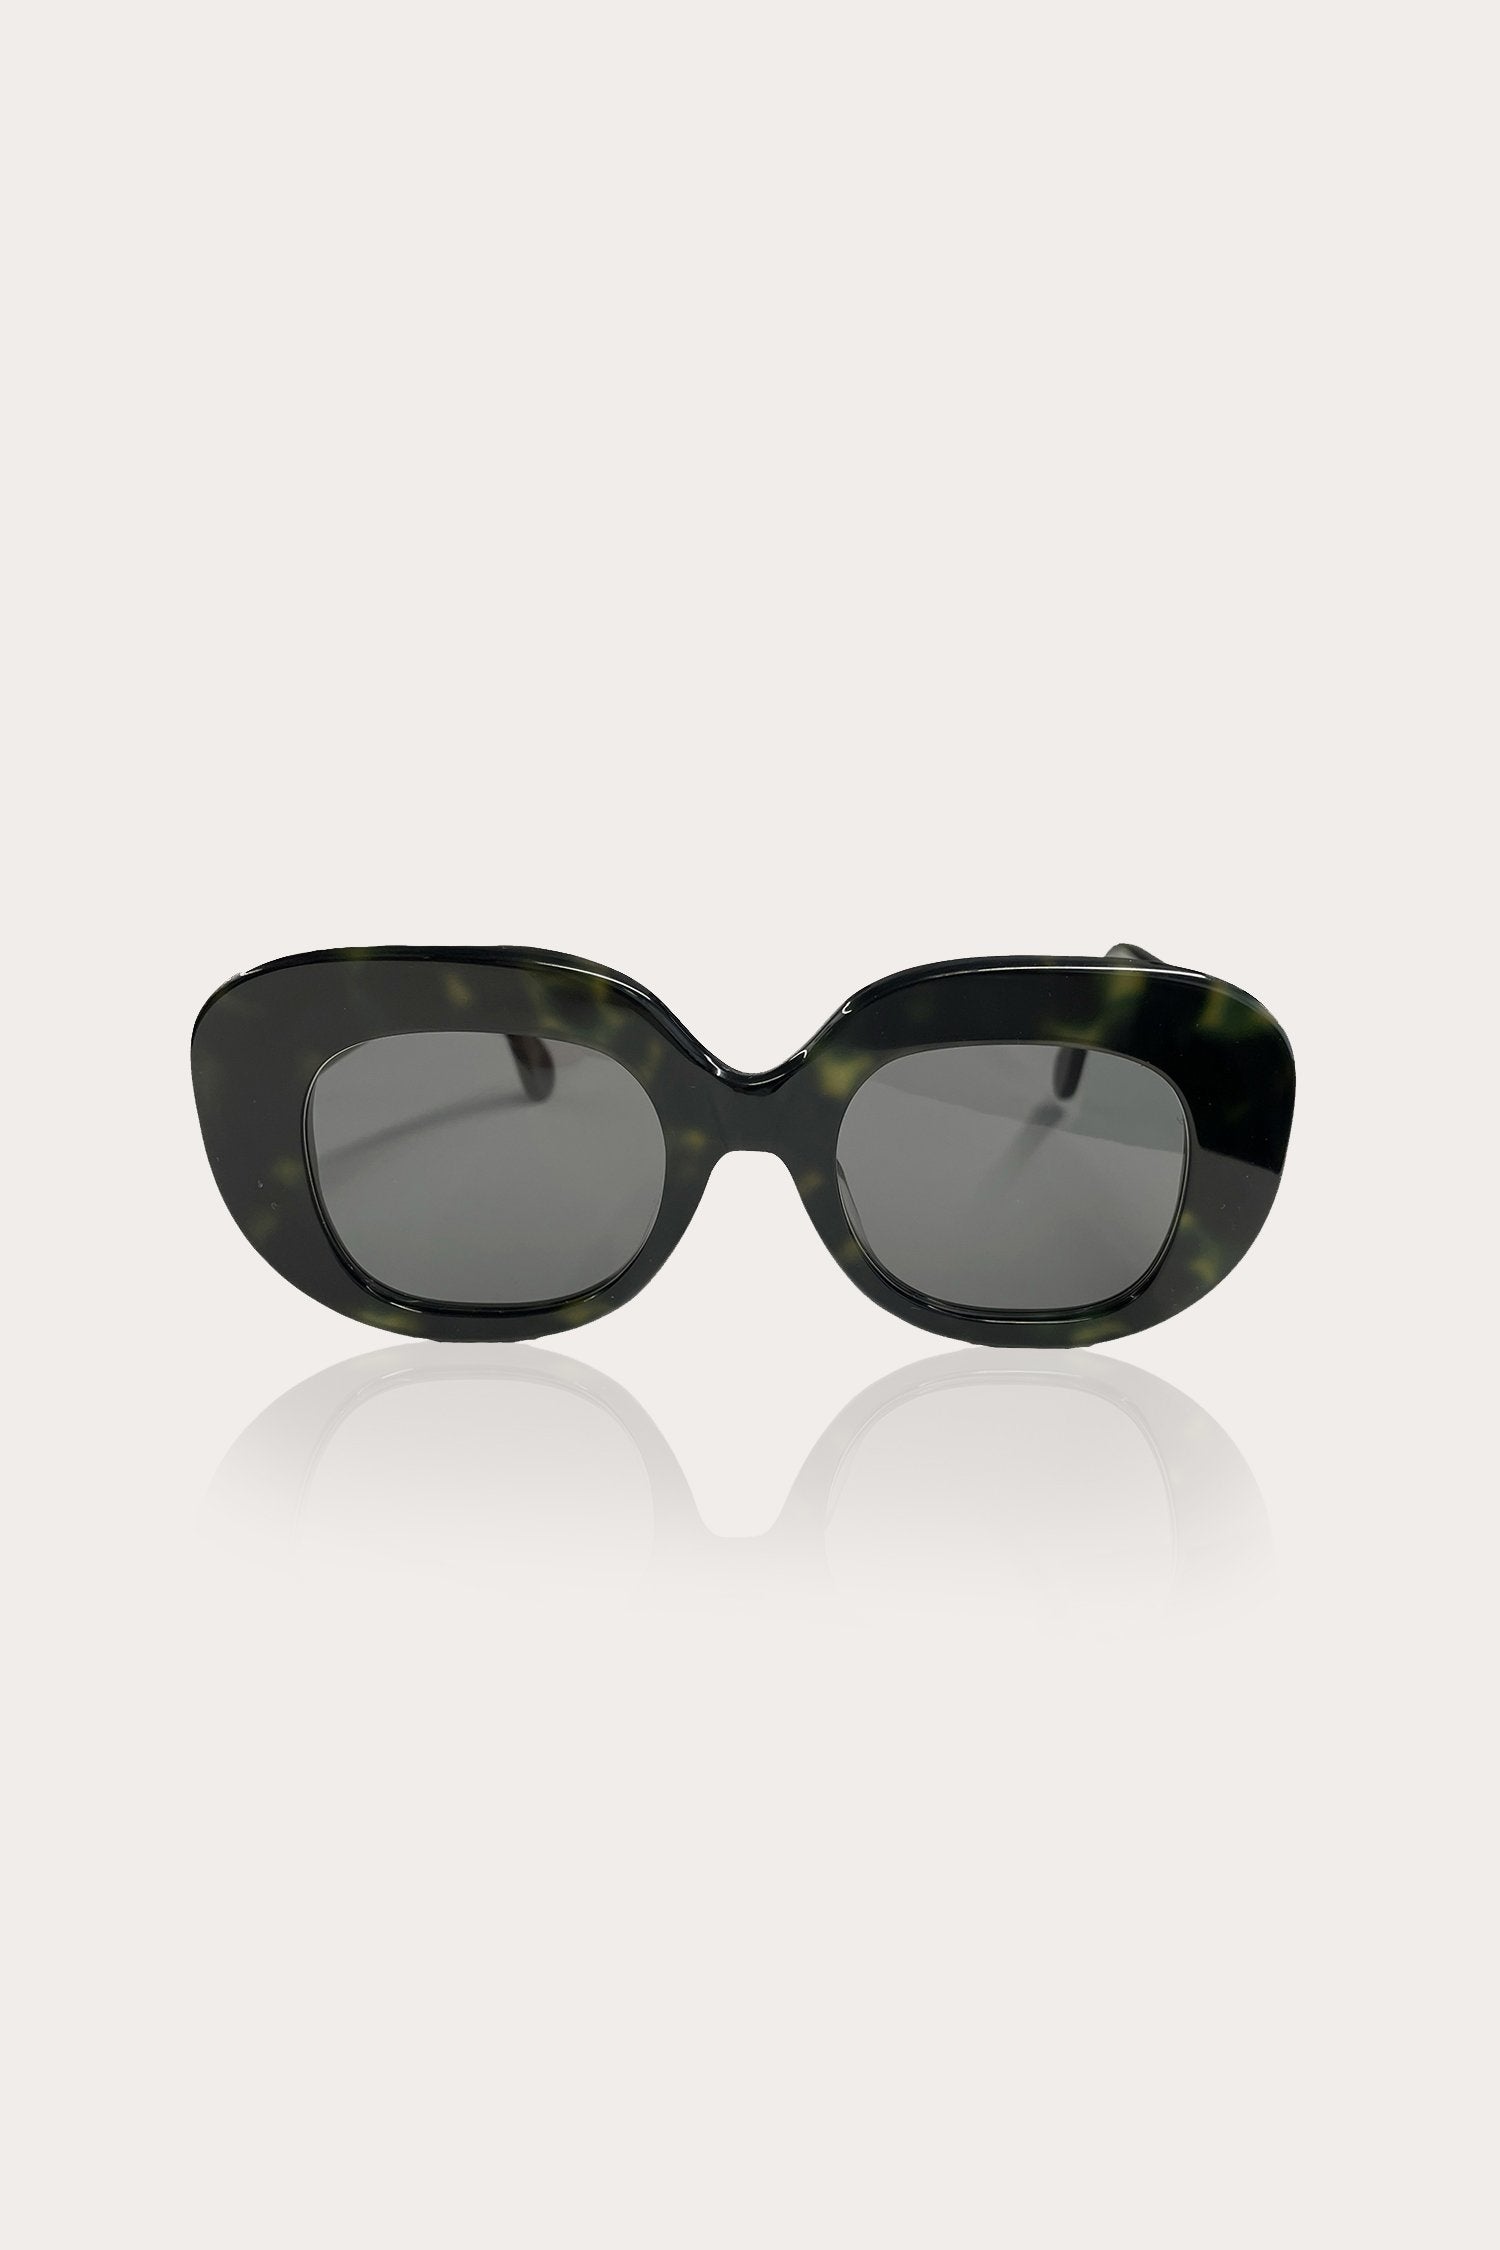 Fellow Earthlings Sunglasses <br> Green - Anna Sui